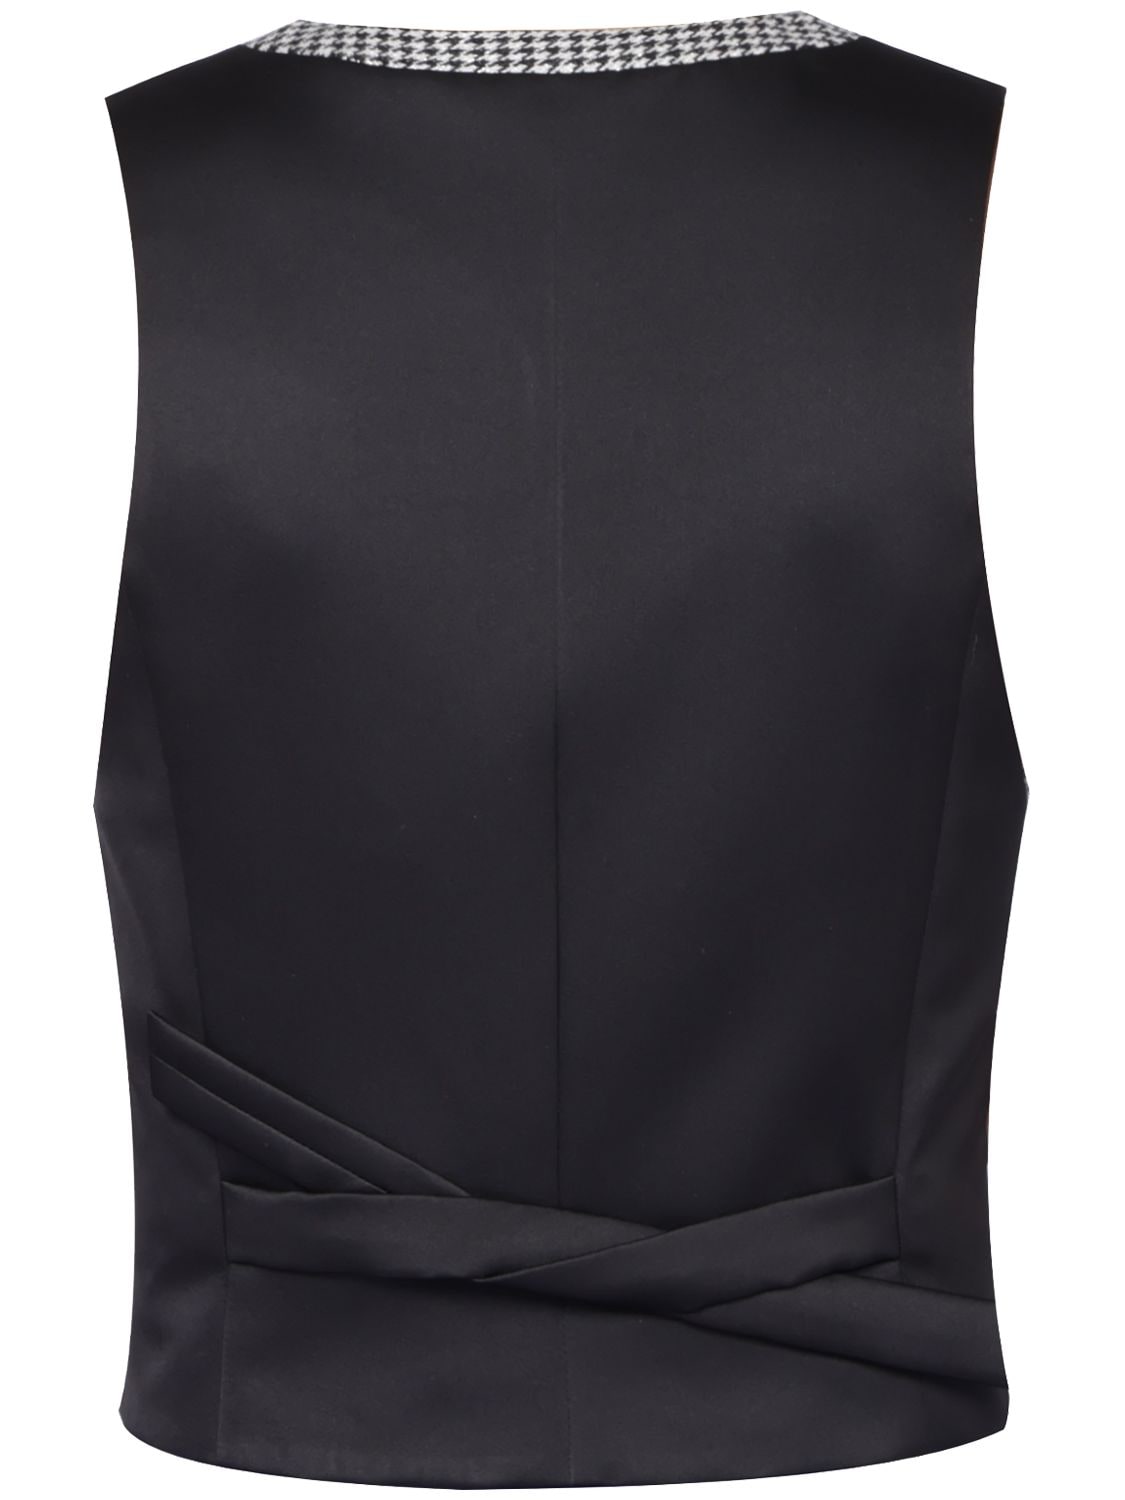 Shop Alexandre Vauthier Houndstooth Wool Blend Vest In Black,white